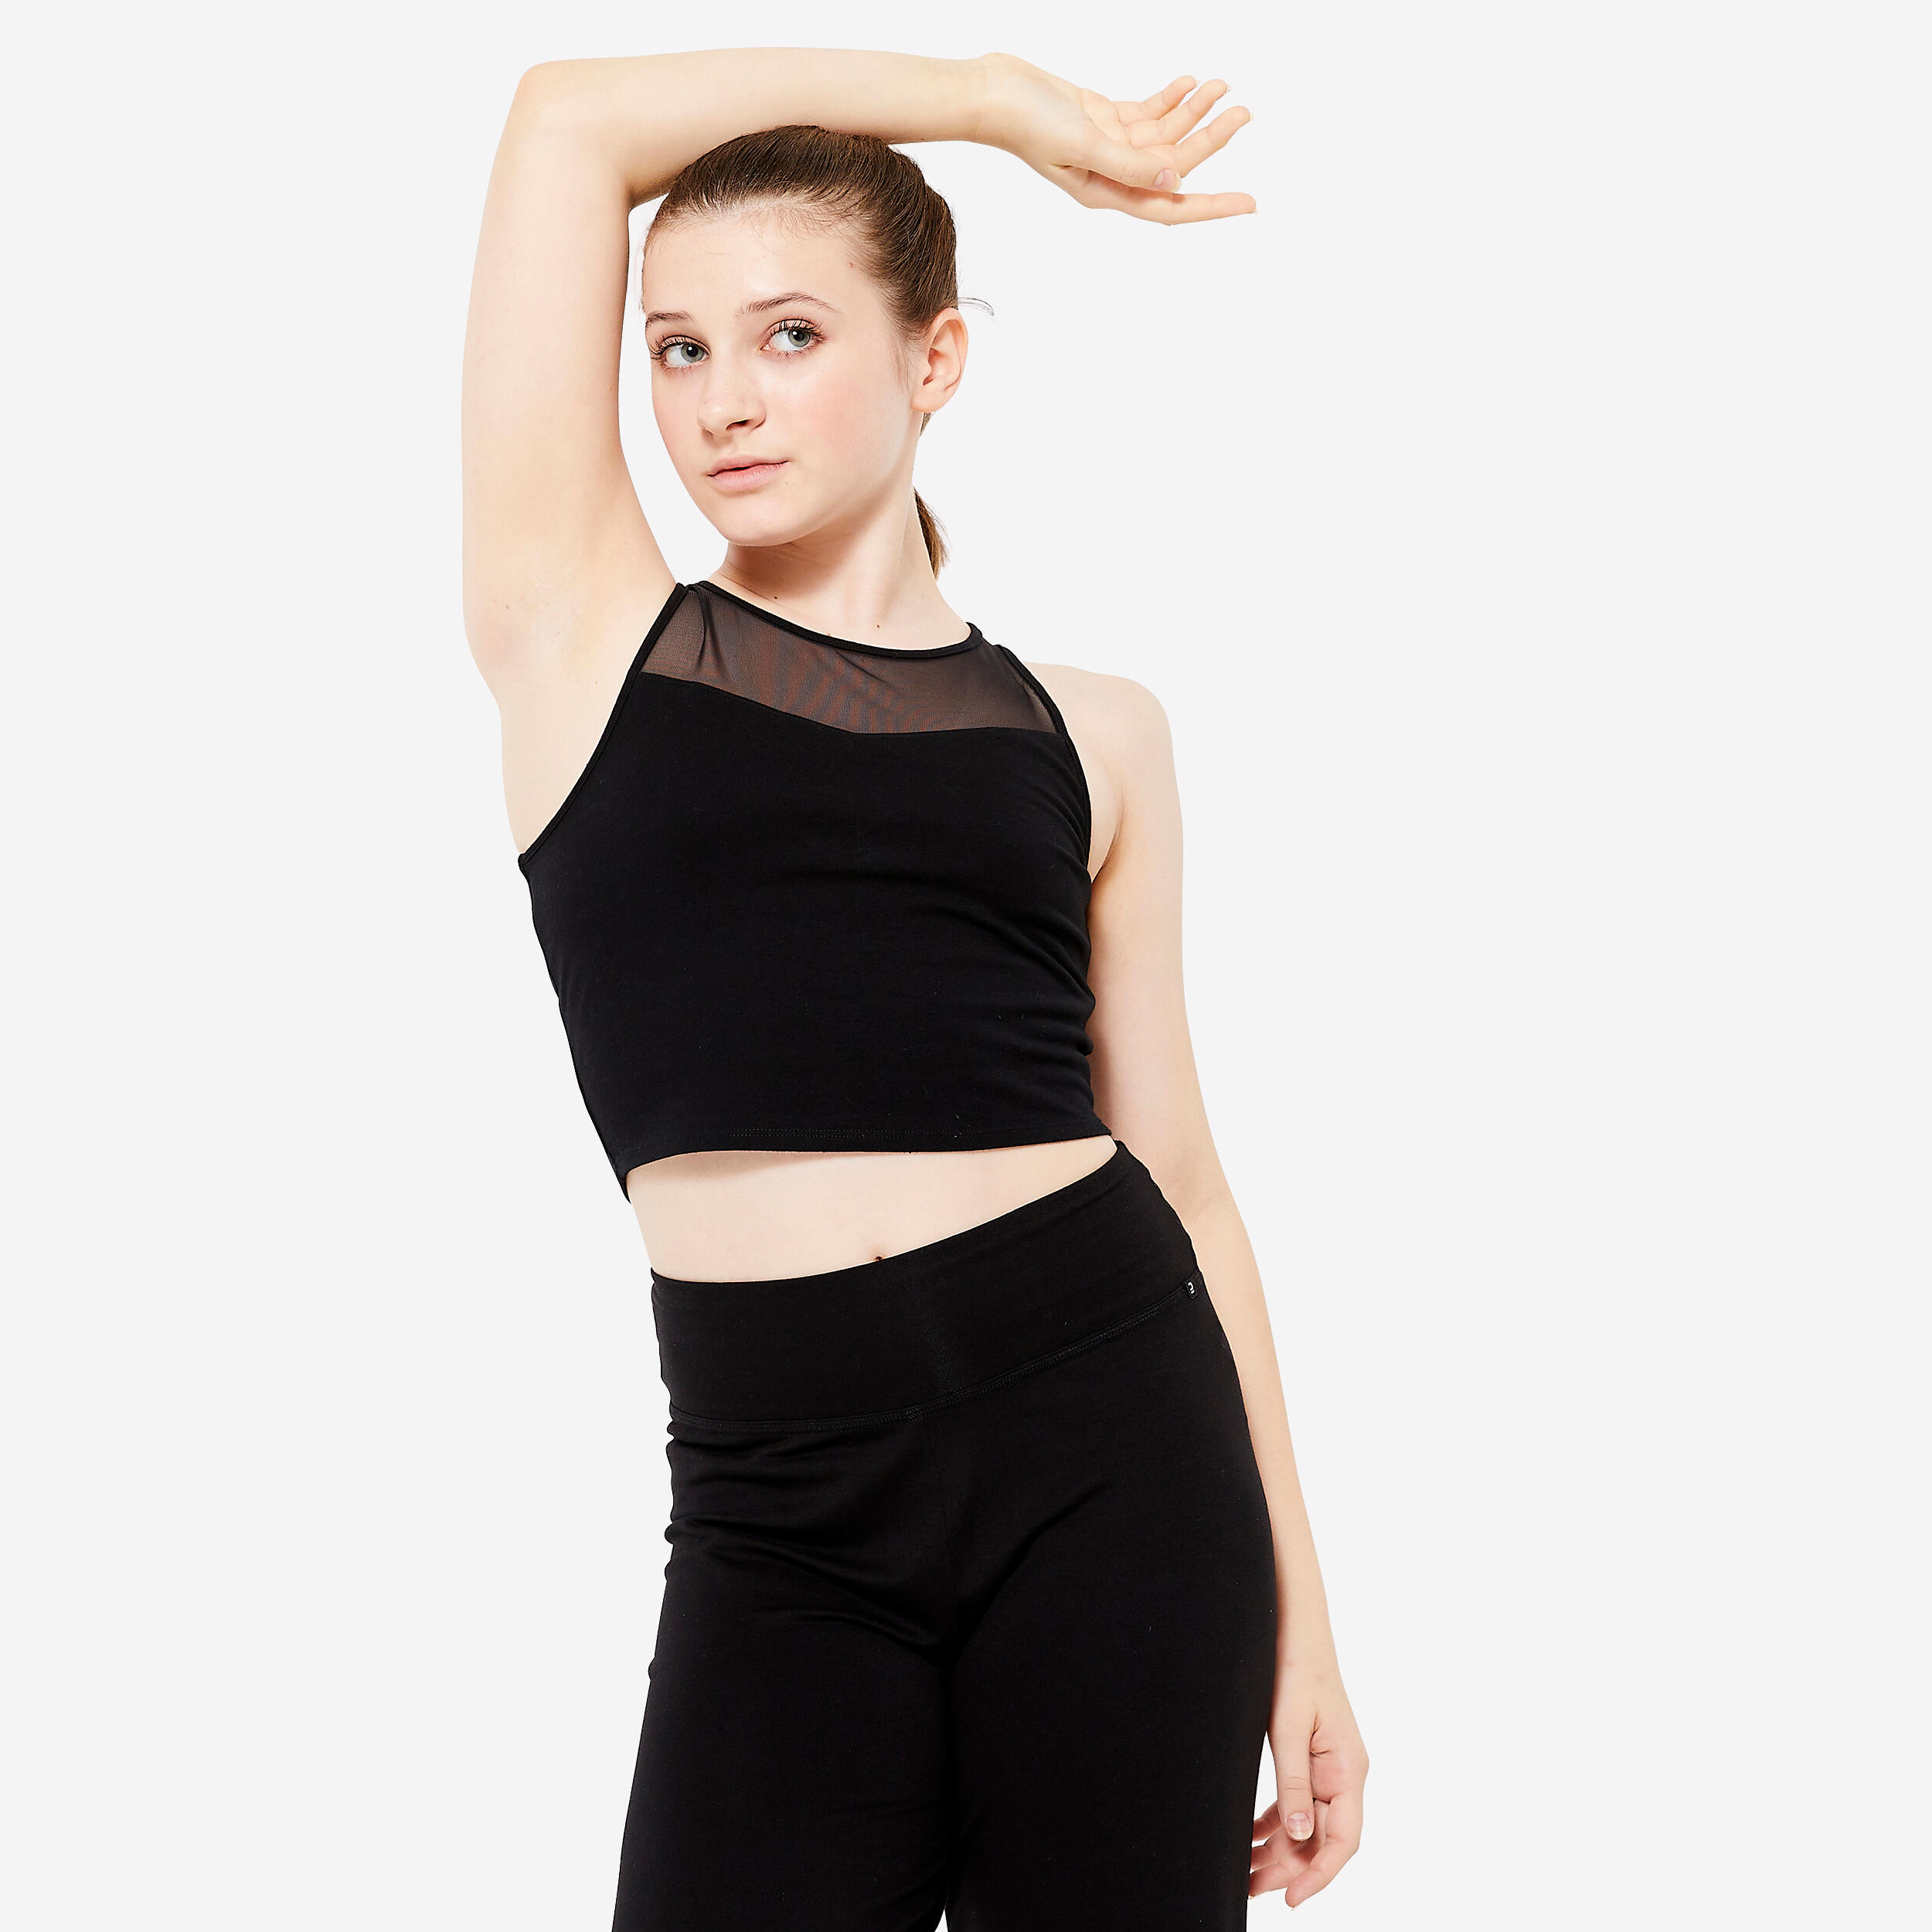 Girls' Modern Dance/Jazz Crop Top with Built-In Sports Bra - Black STAREVER